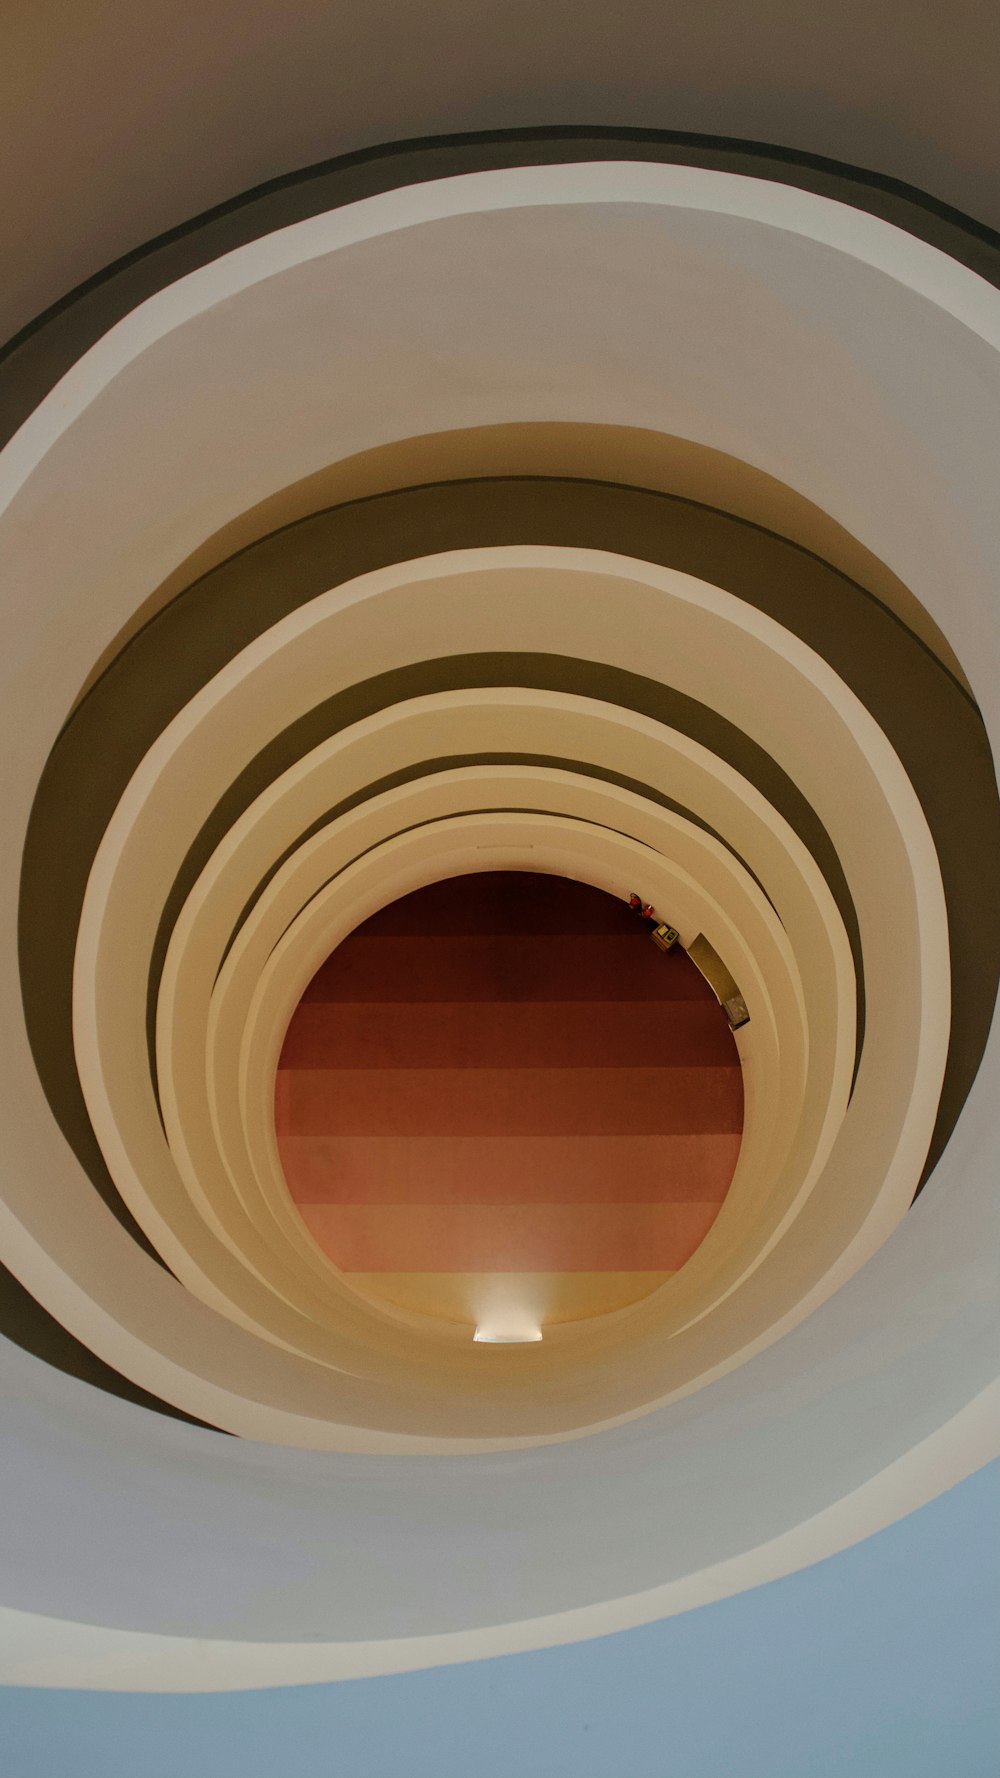 a circular light fixture in a circular room